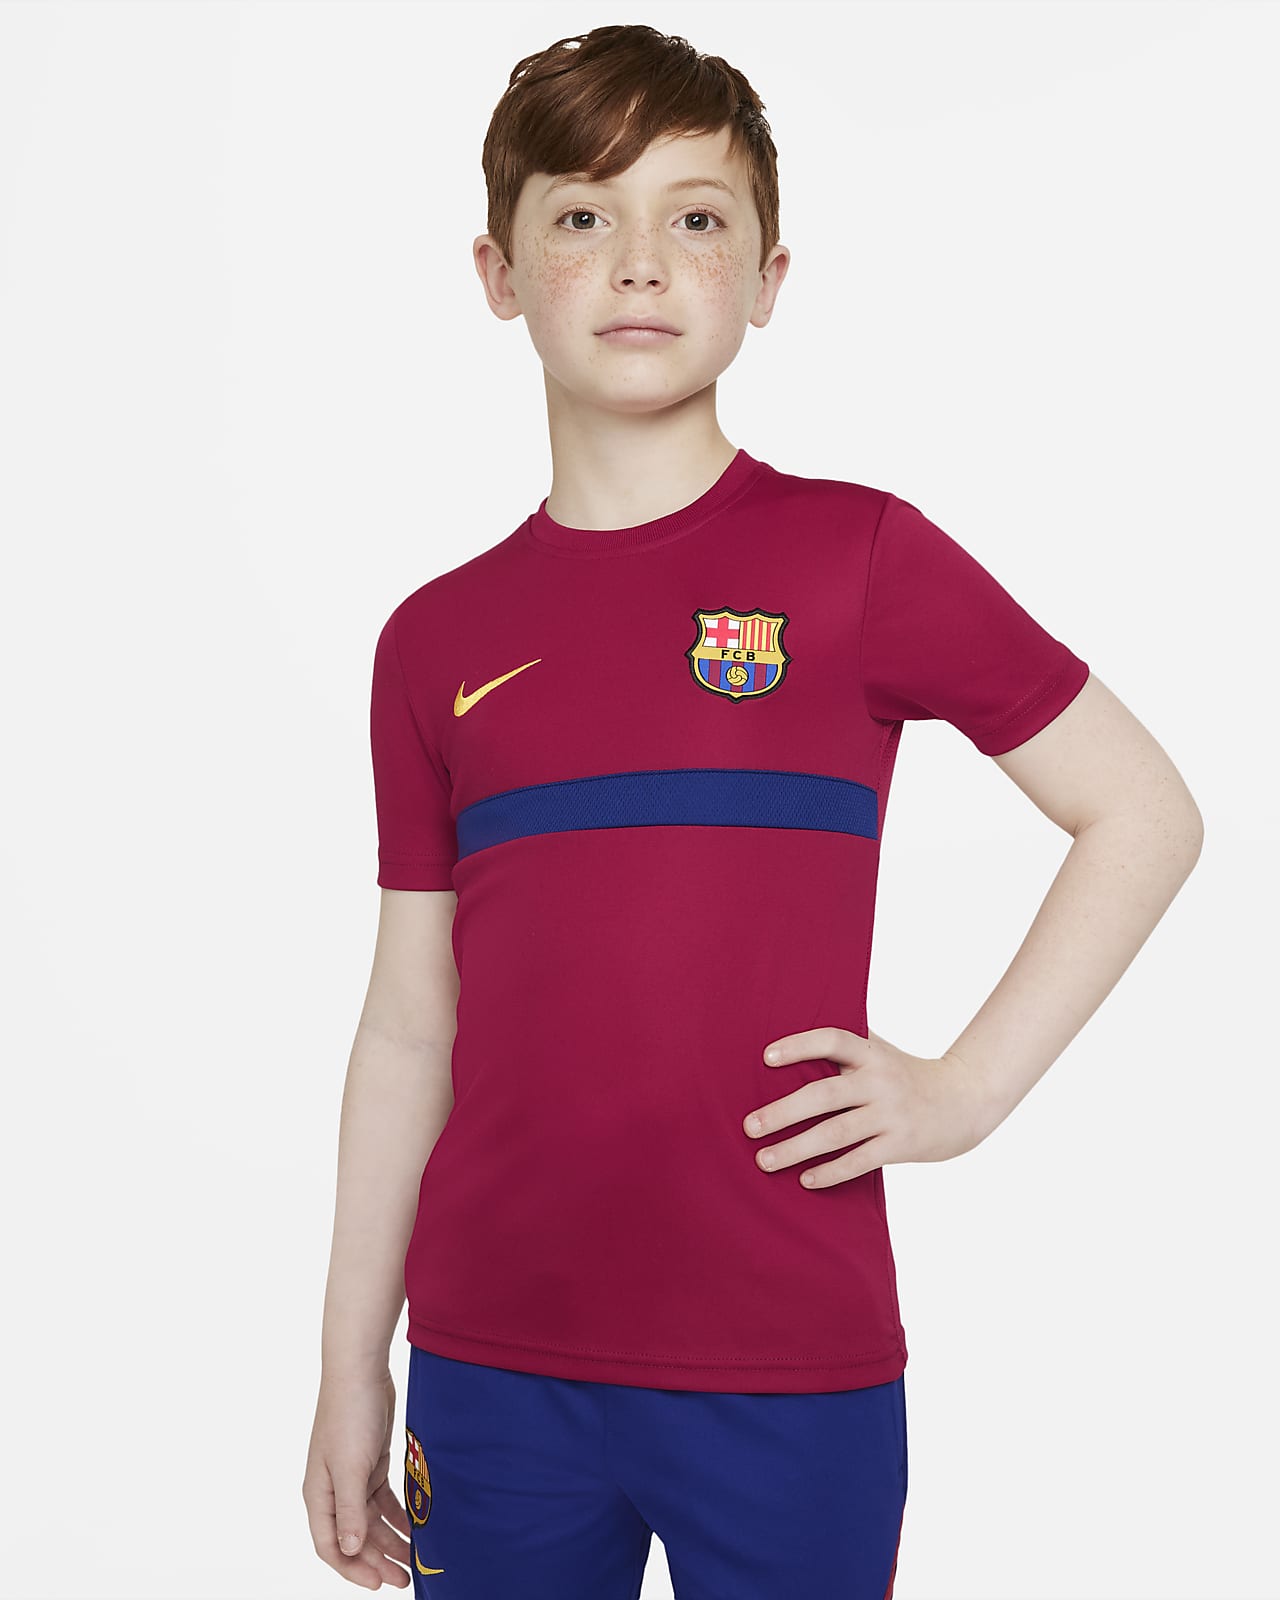 Meesterschap als Spookachtig F.C. Barcelona Academy Pro Older Kids' Nike Dri-FIT Short-Sleeve Football  Top. Nike SI